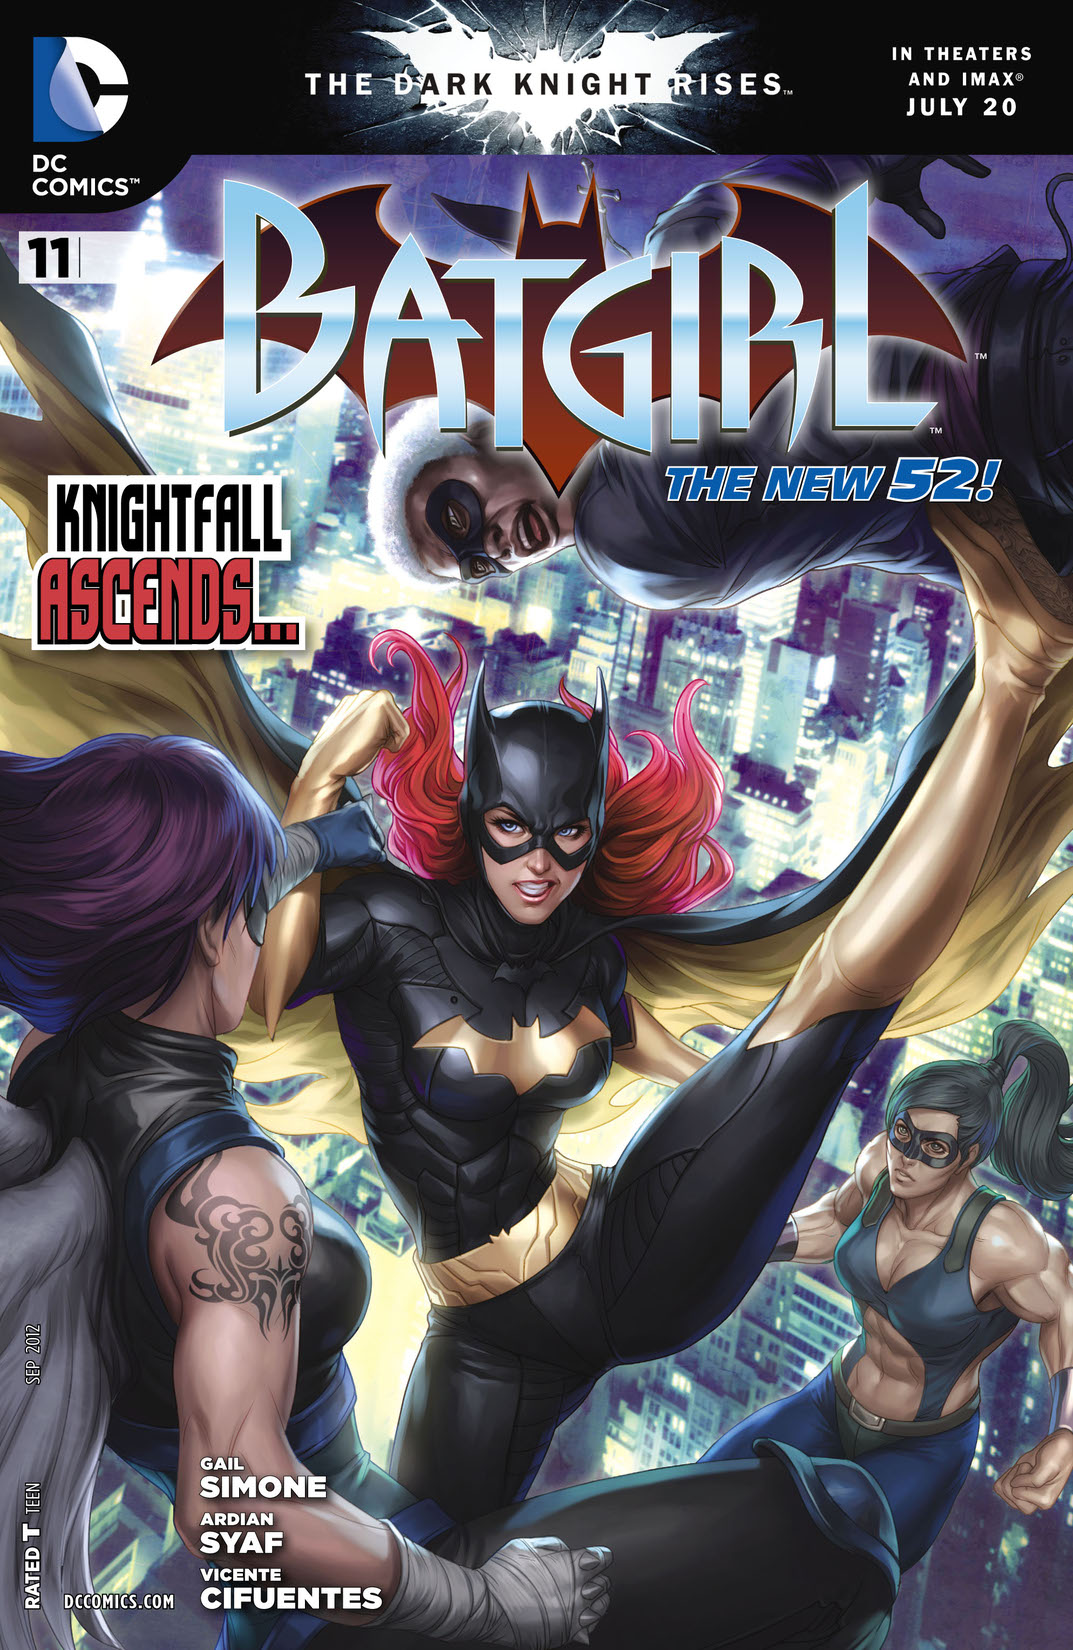 Batgirl (2011-) #11 preview images